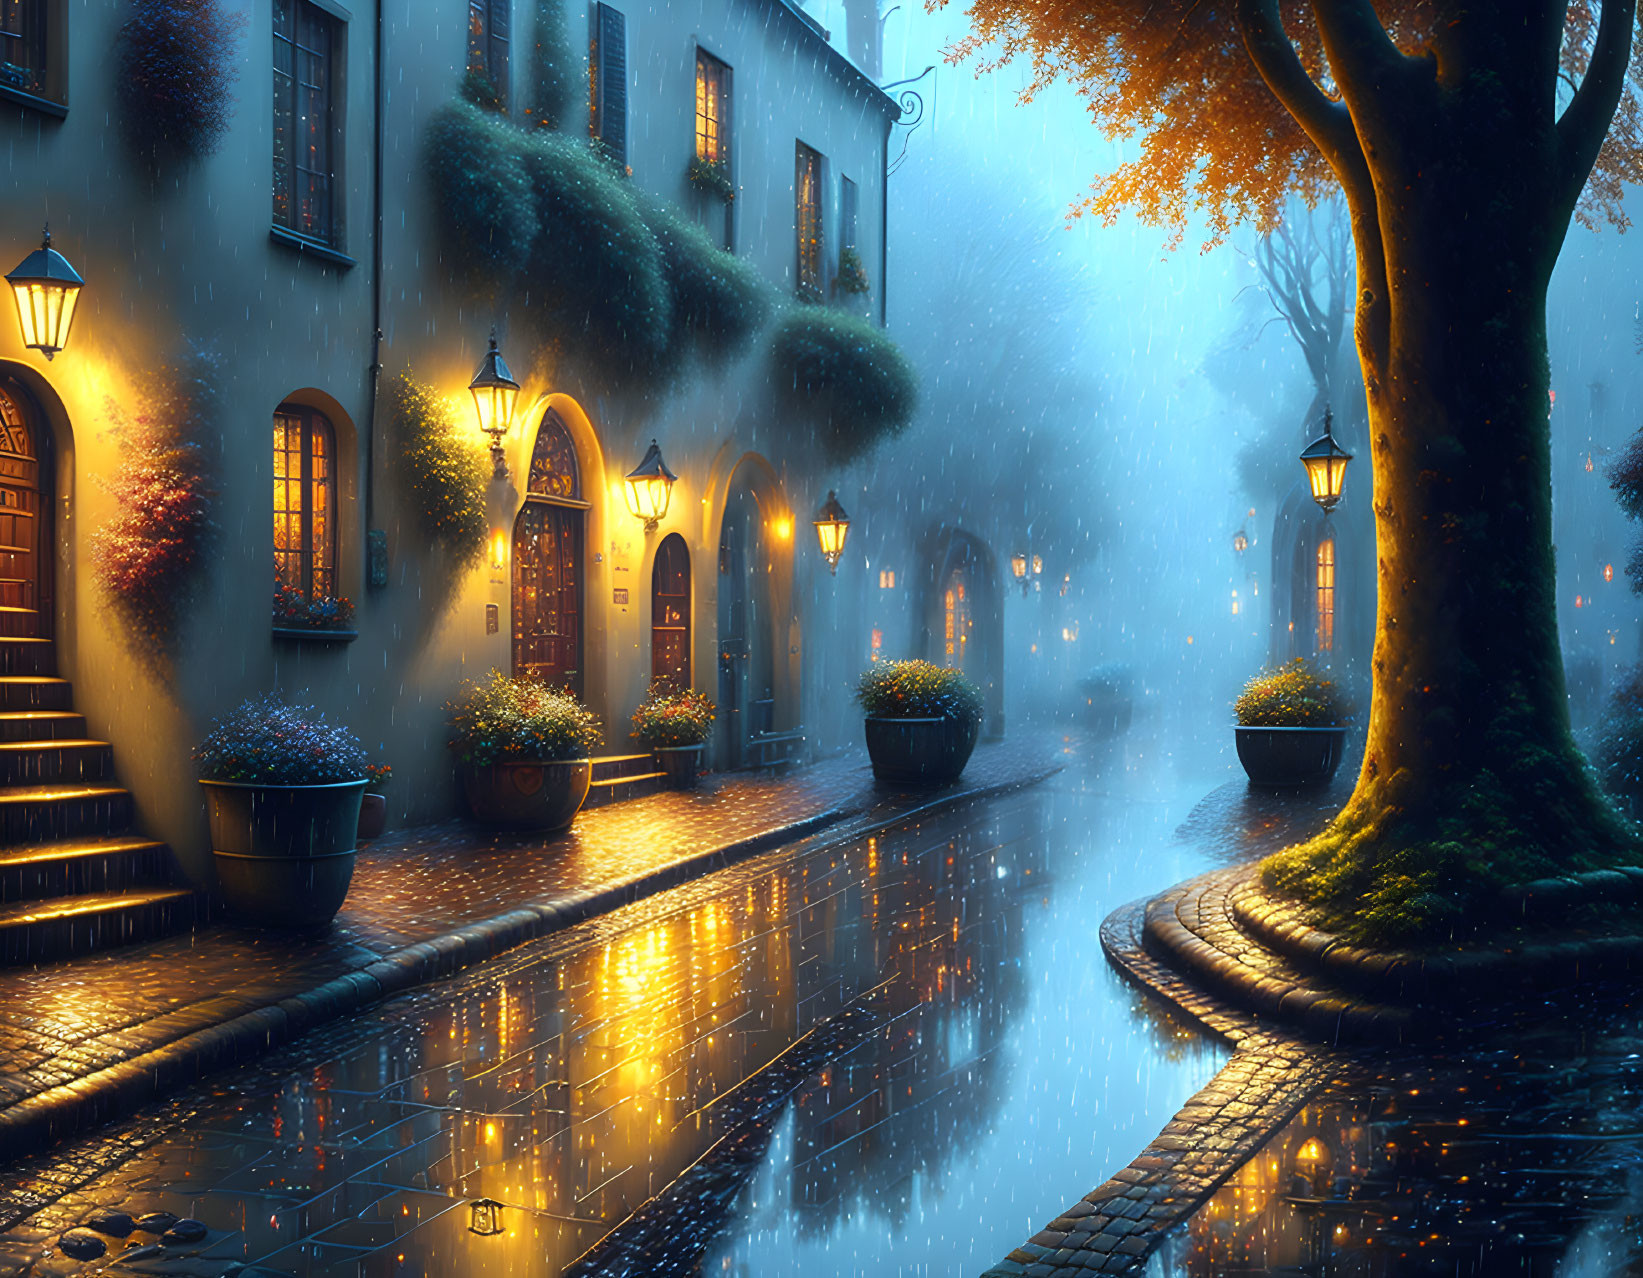 Rain-soaked cobbled street